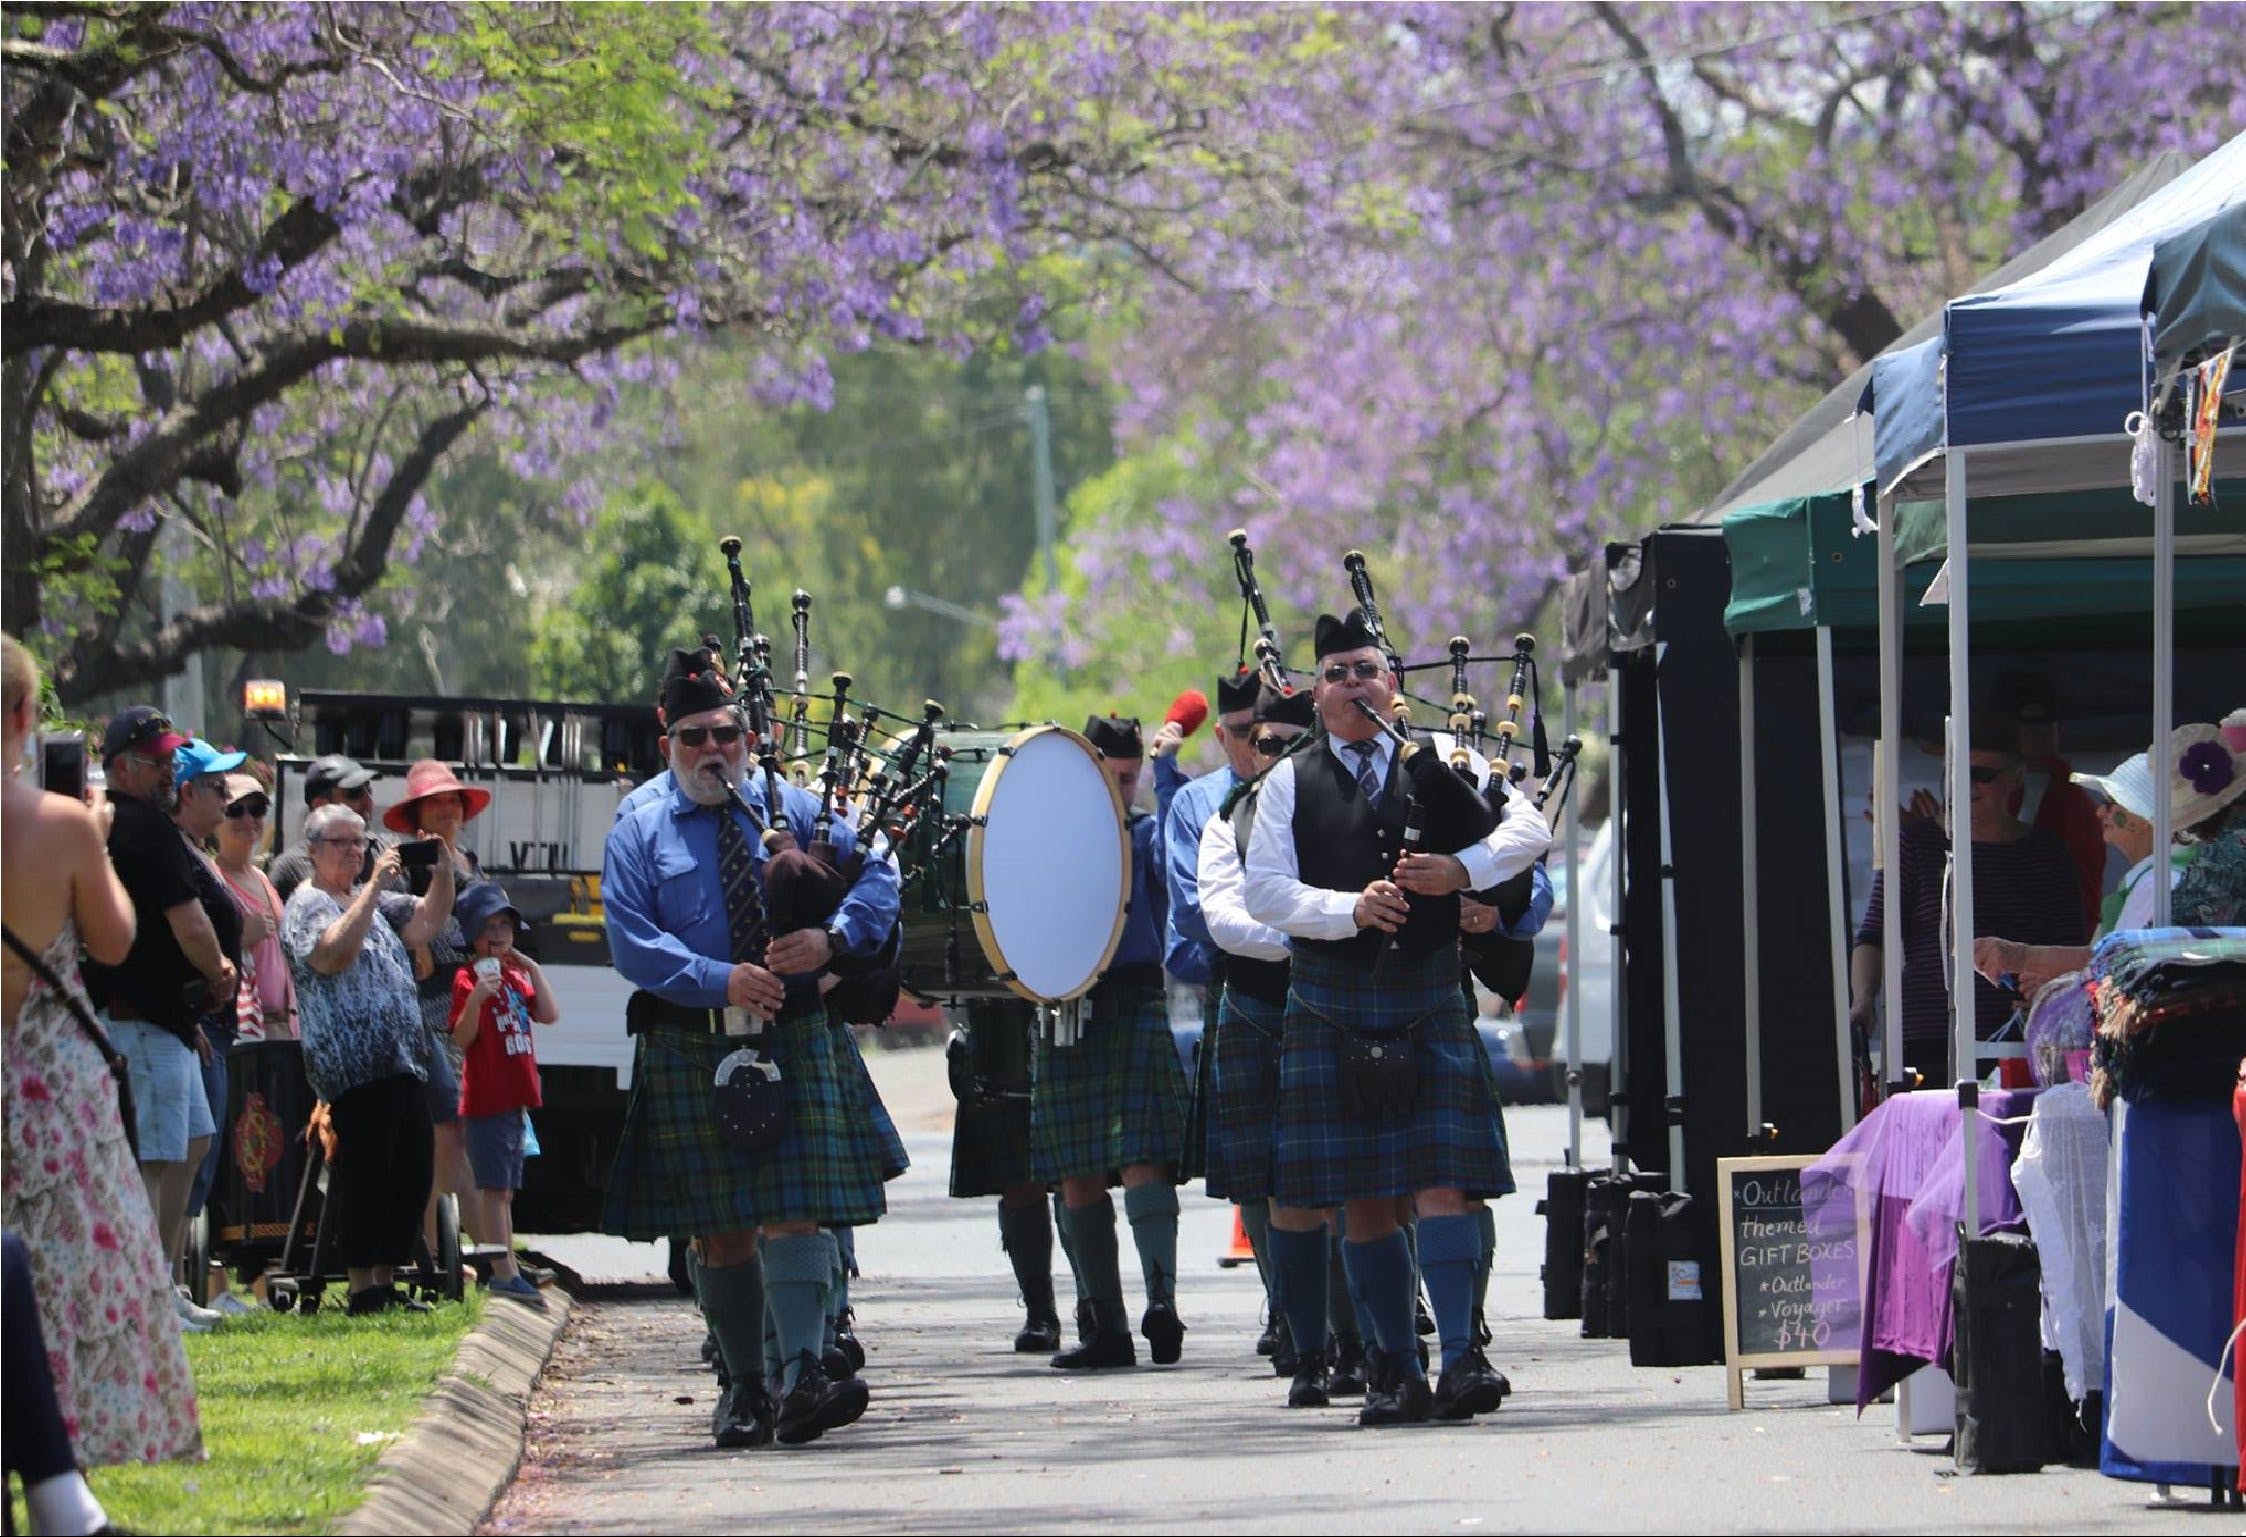 Celtic Festival of Queensland